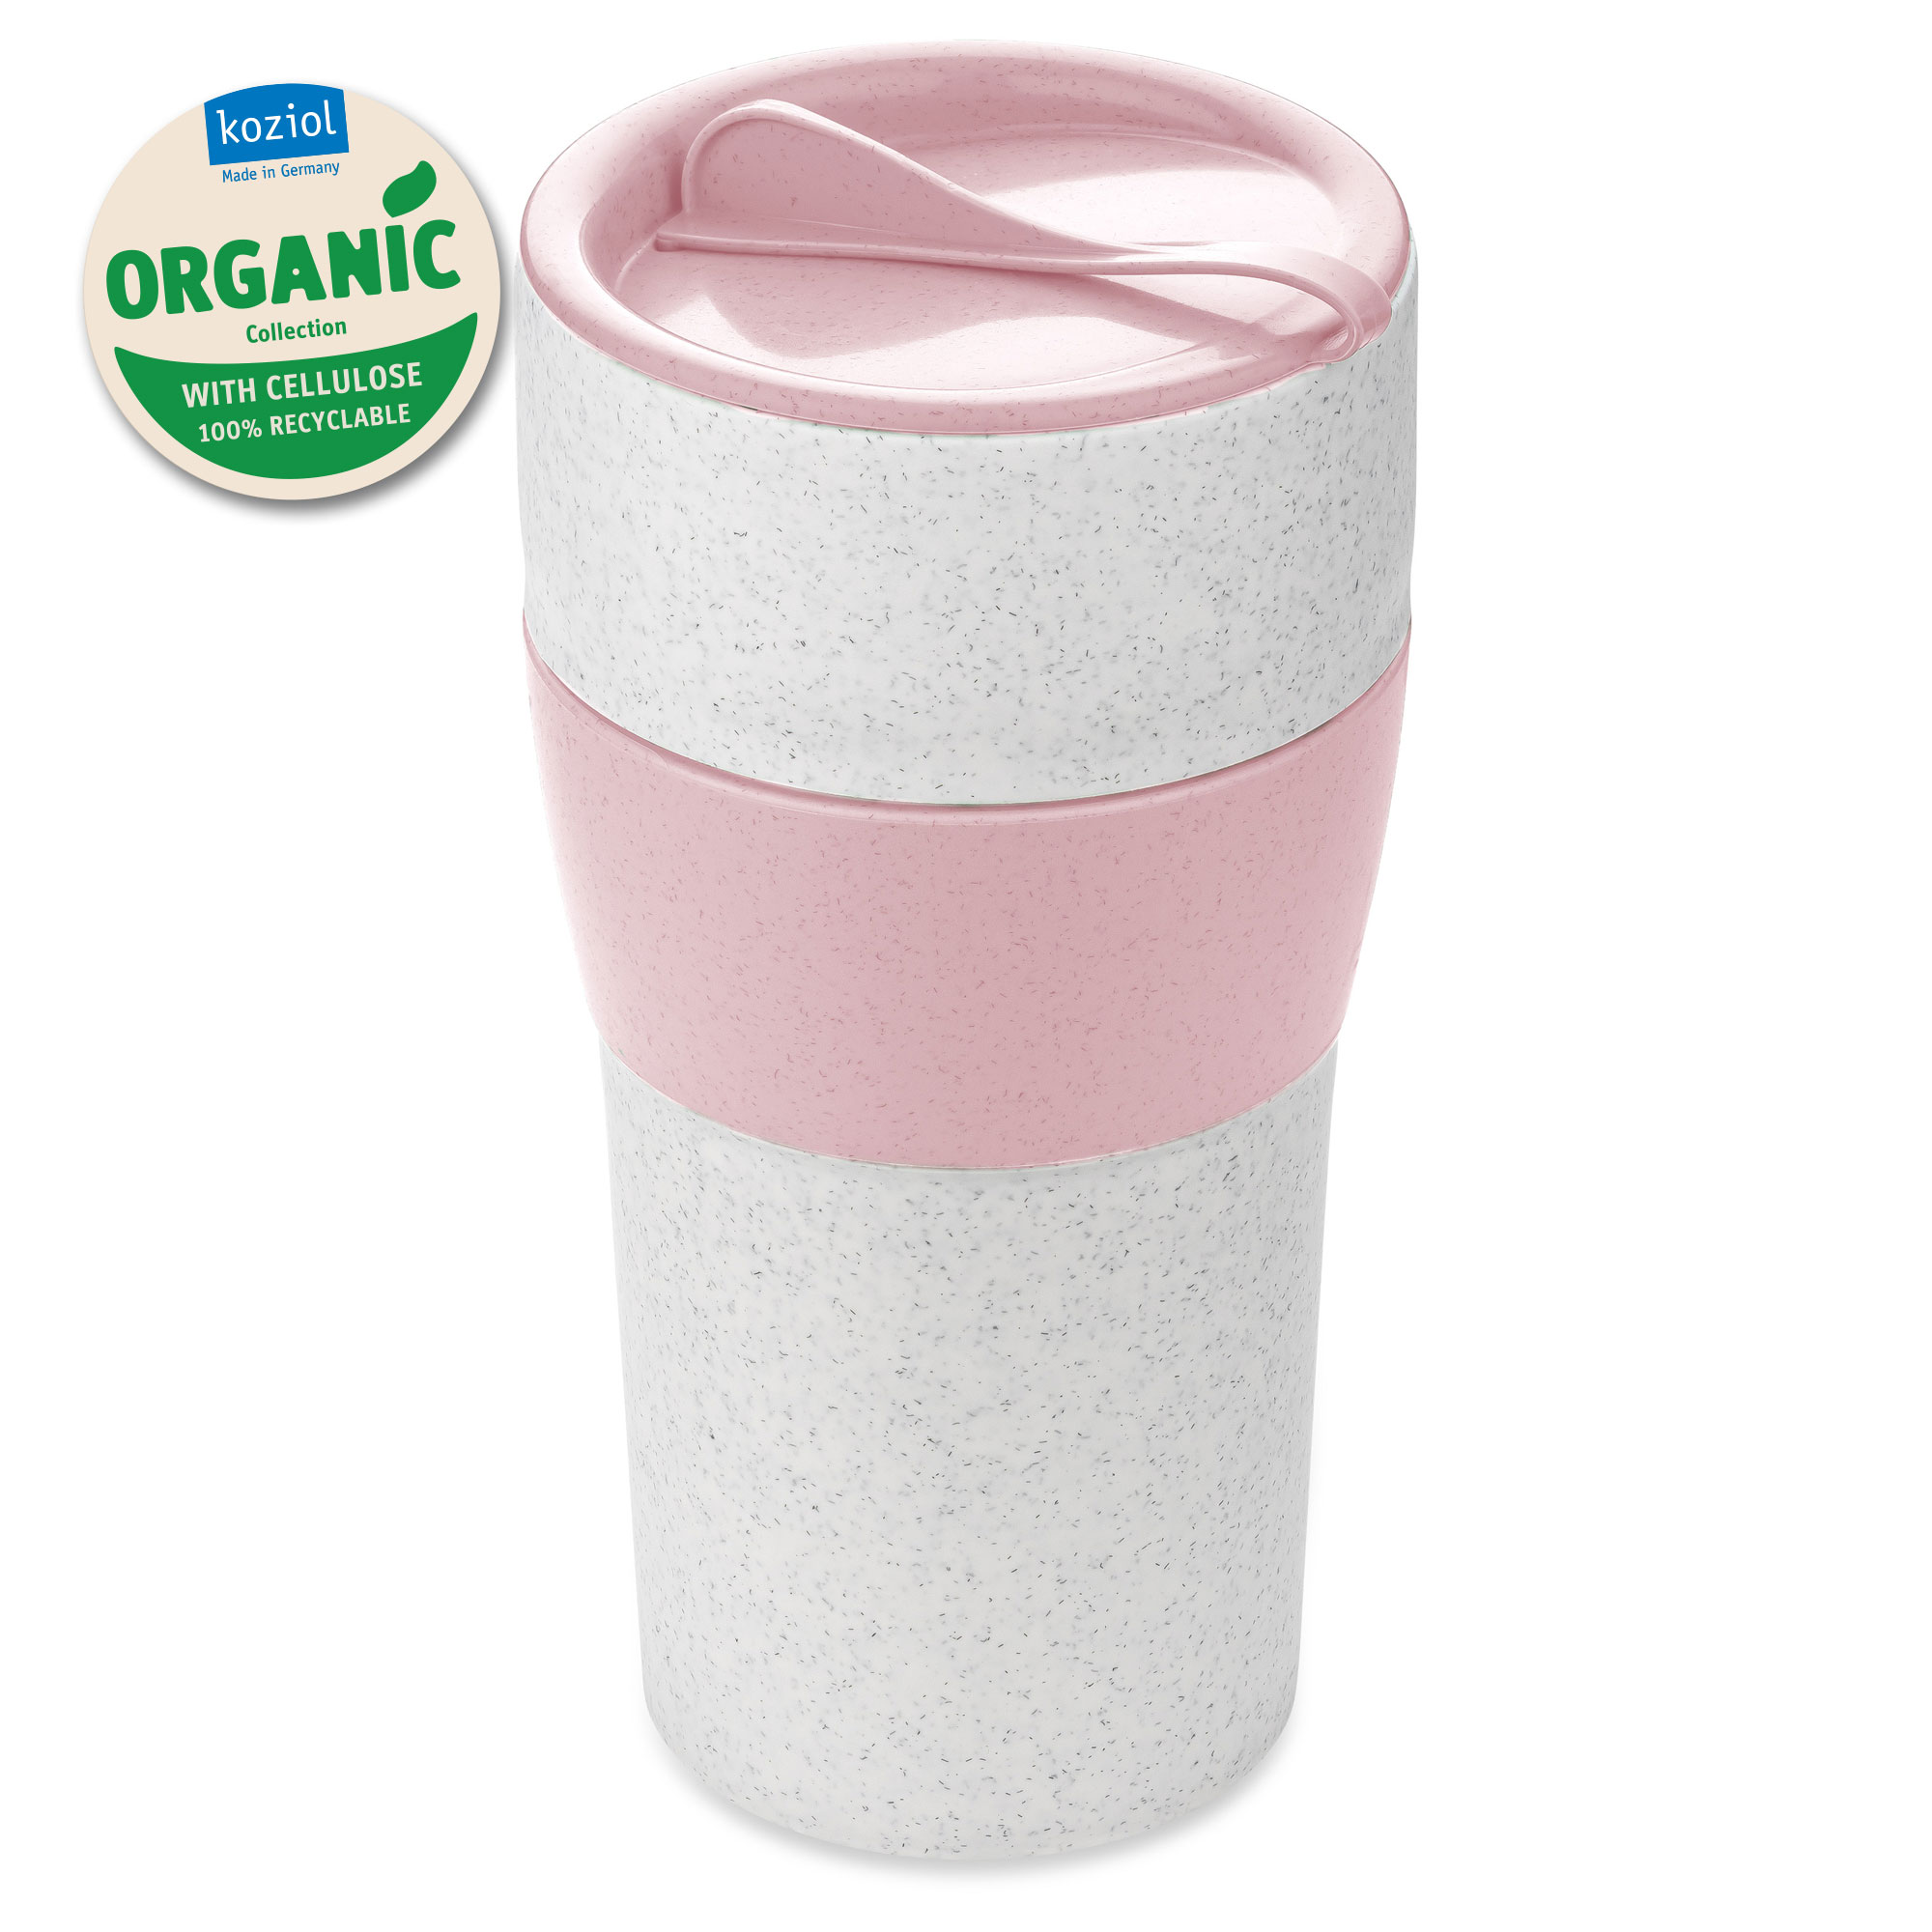 Koziol Thermobecher mit Deckel 700ml Aroma to Go  XL  organic pink